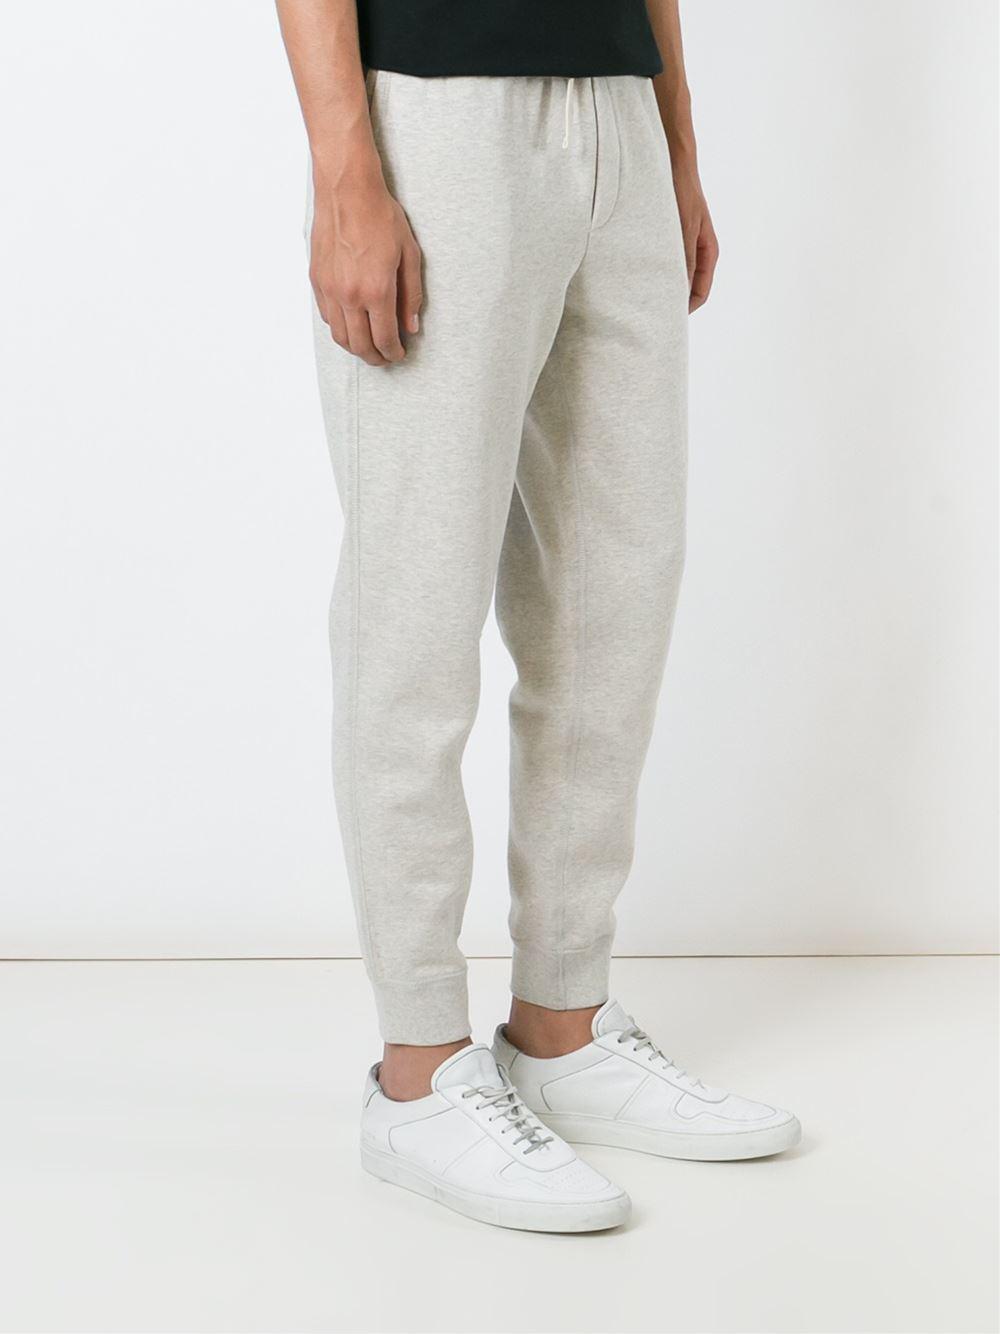 Polo Ralph Lauren Cotton Cuffed Sweatpants in Grey (Gray) for Men - Lyst